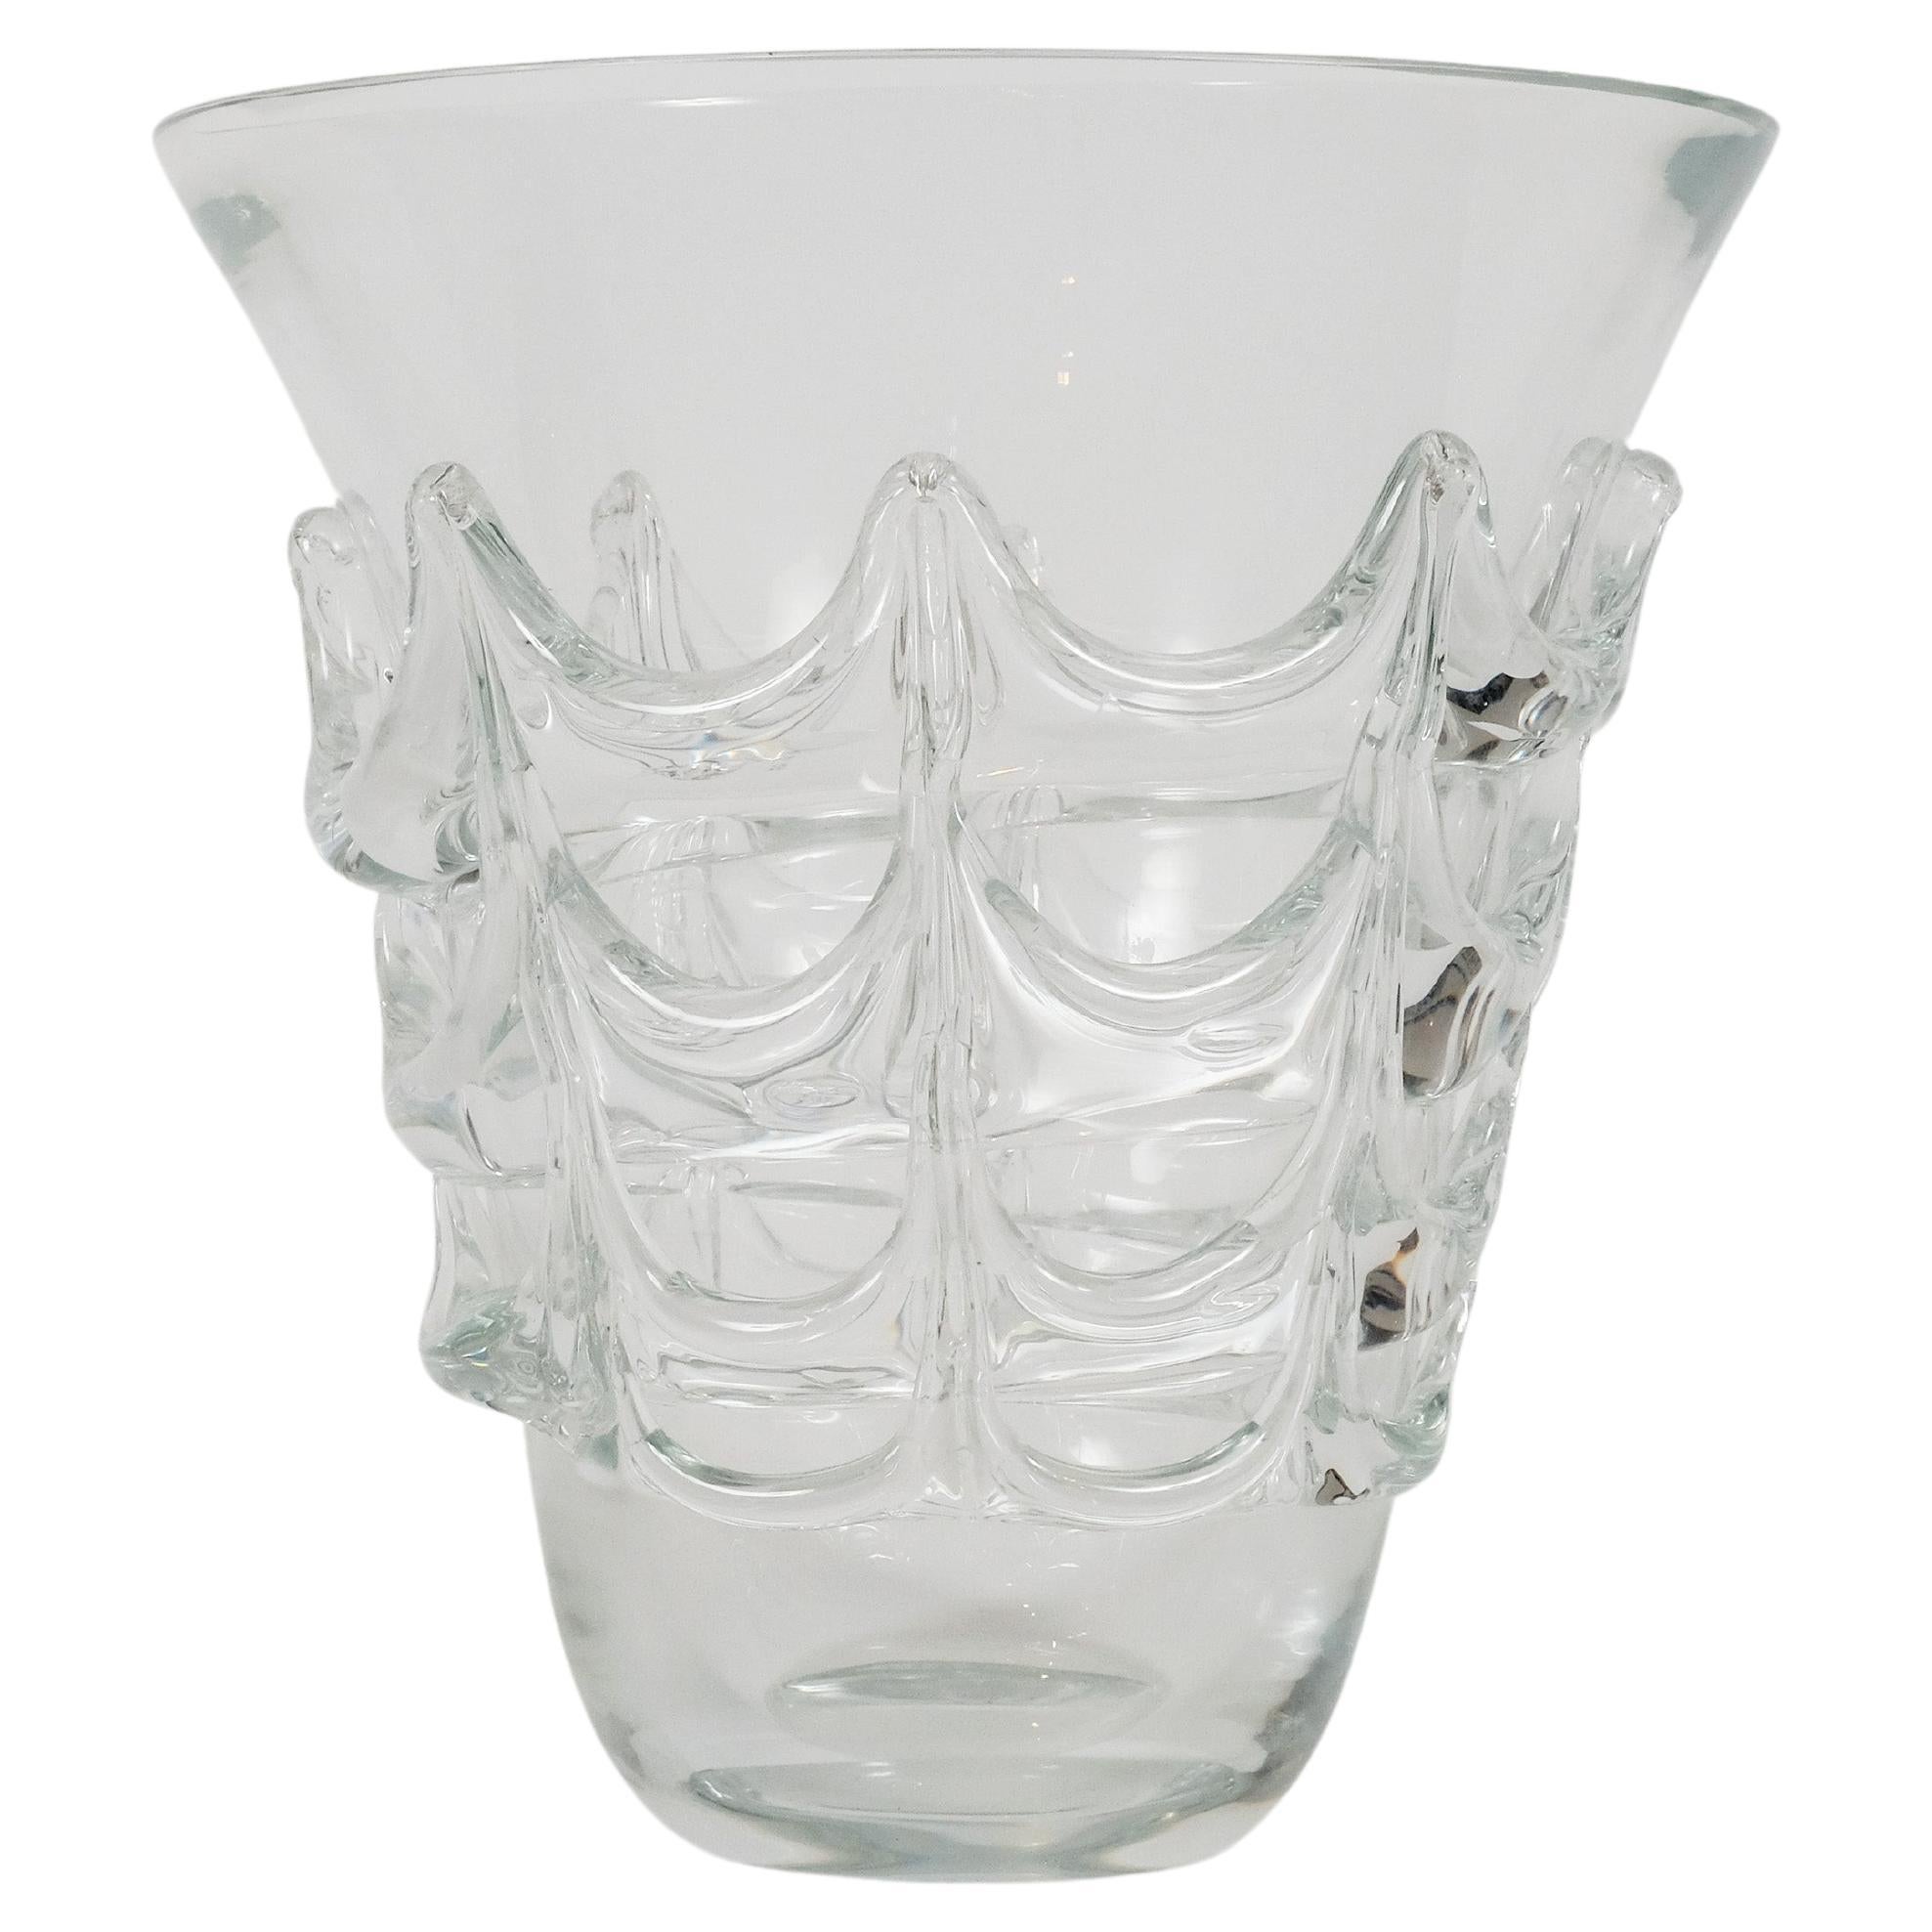 Murano glass vase by renowned Venetian born Master Pino Signoretto